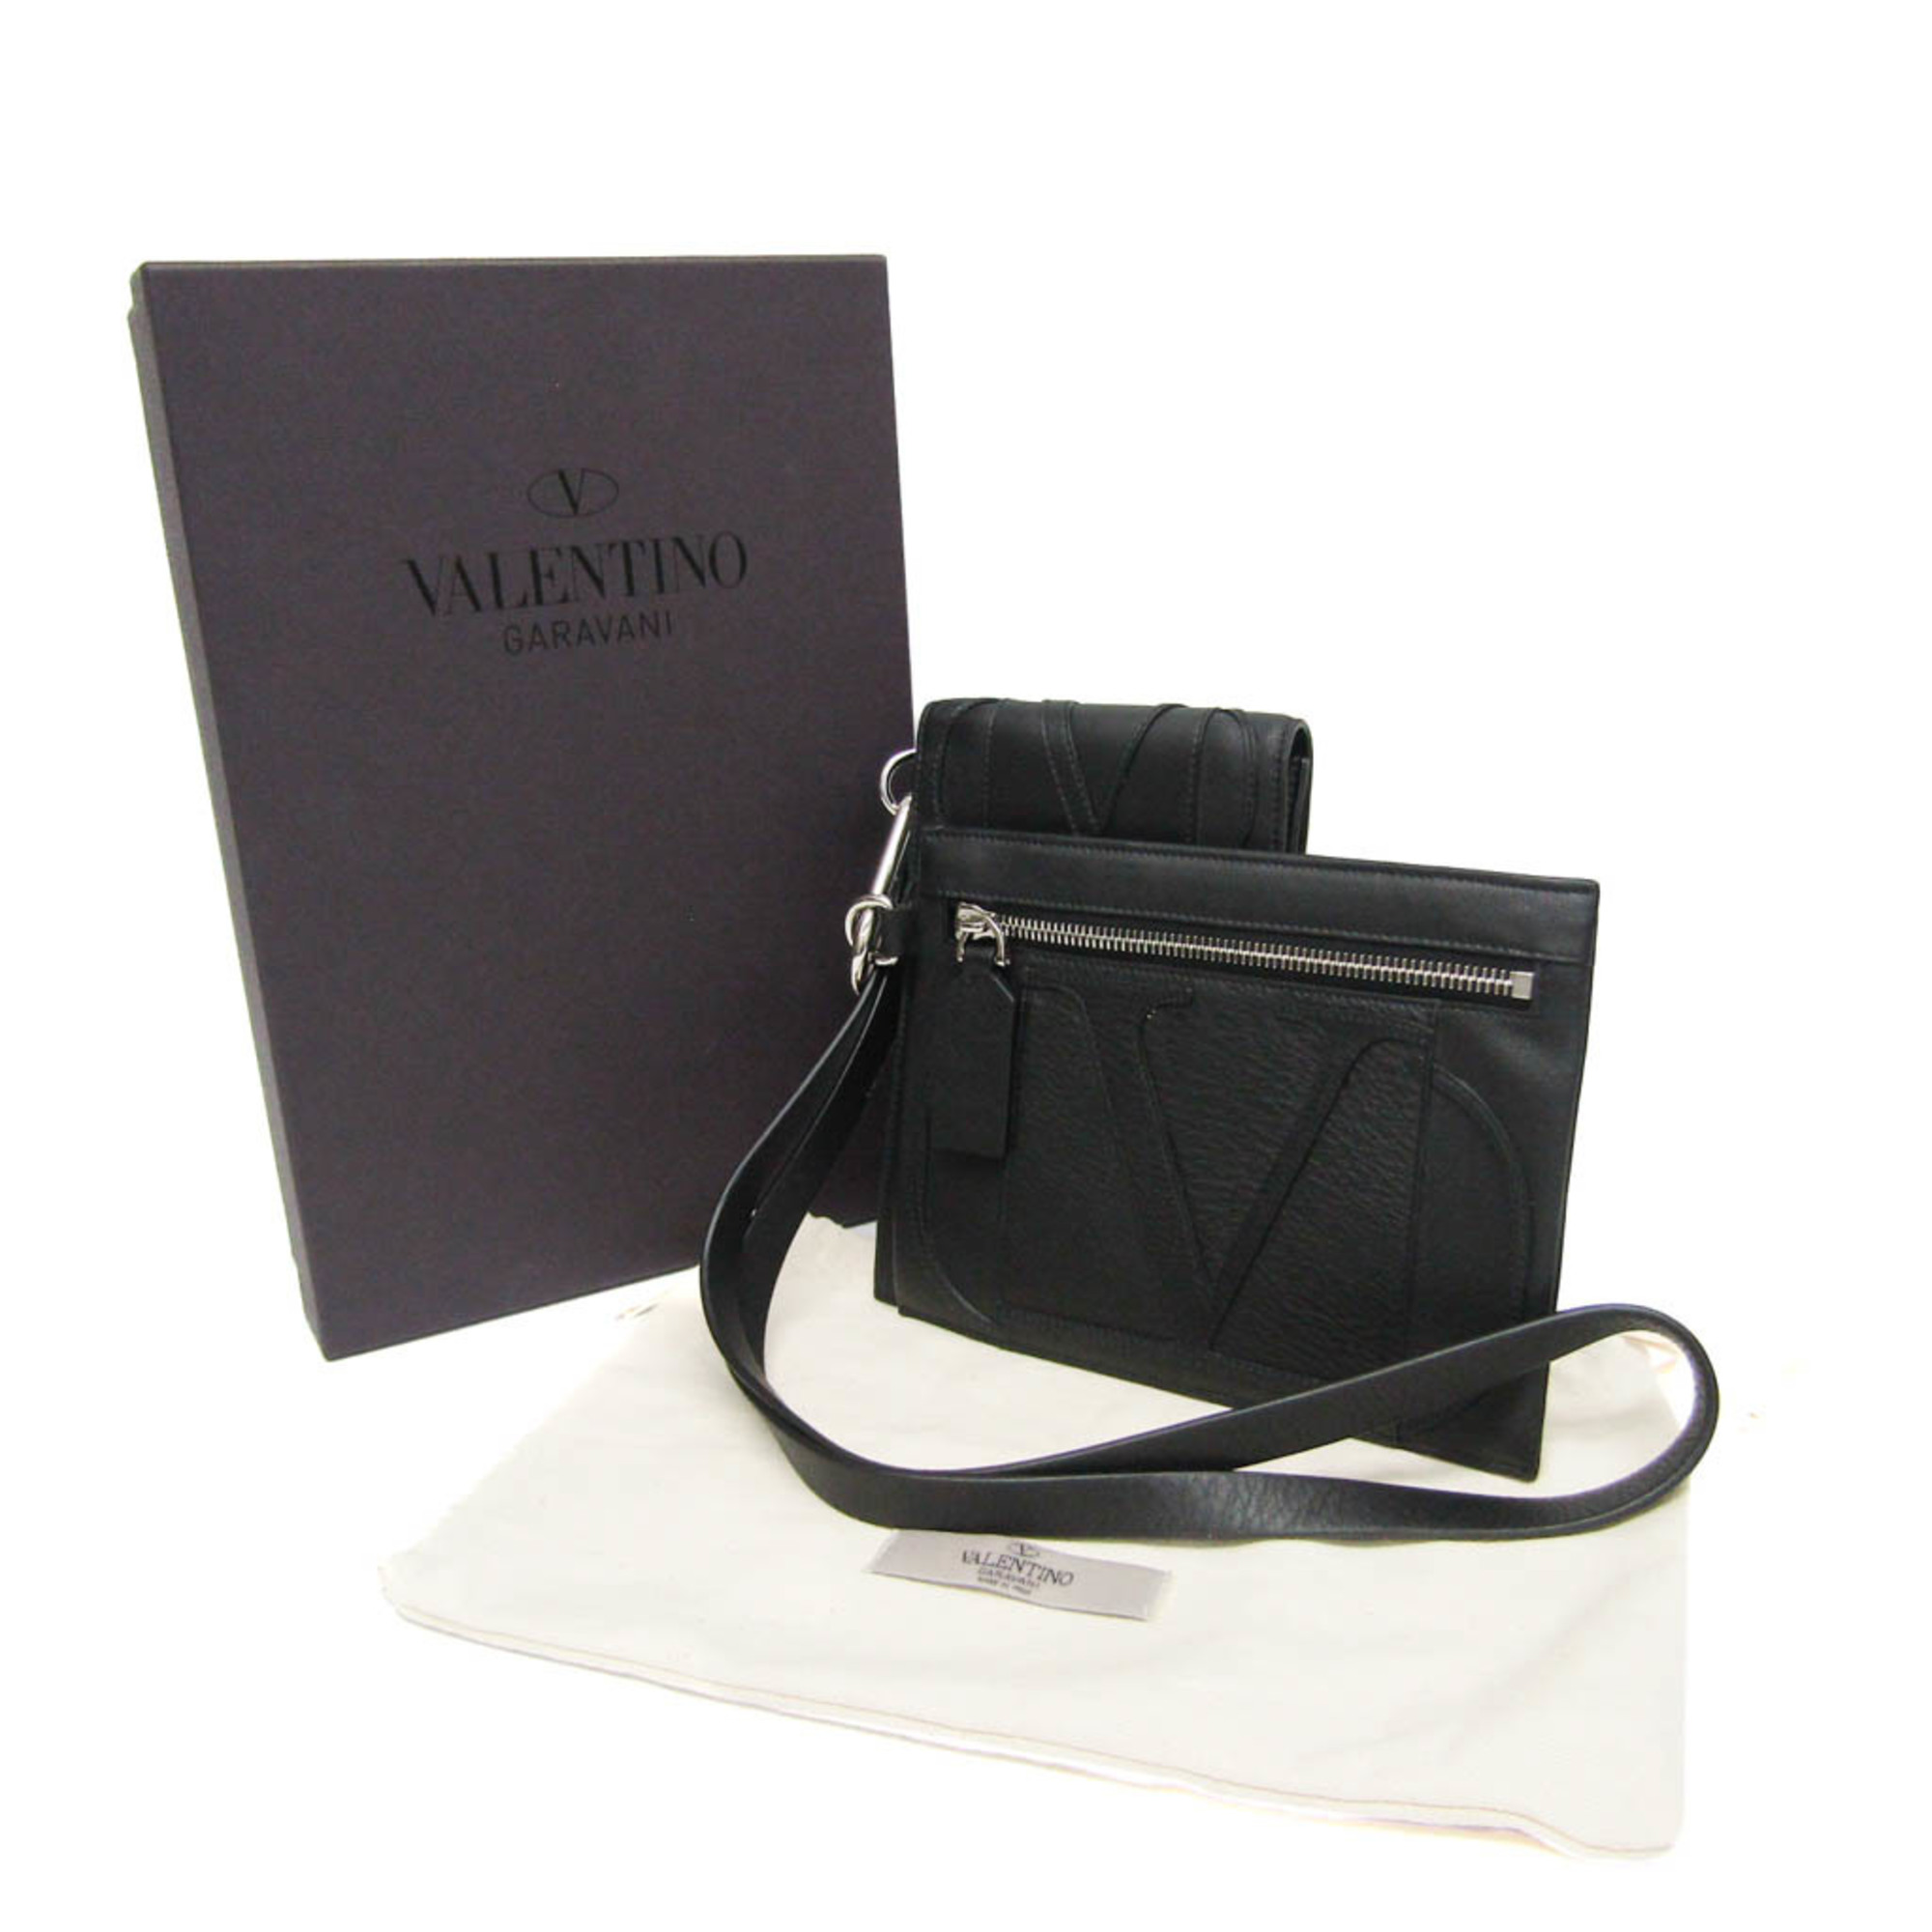 Valentino Garavani Women,Men Leather Clutch Bag,Pouch Black